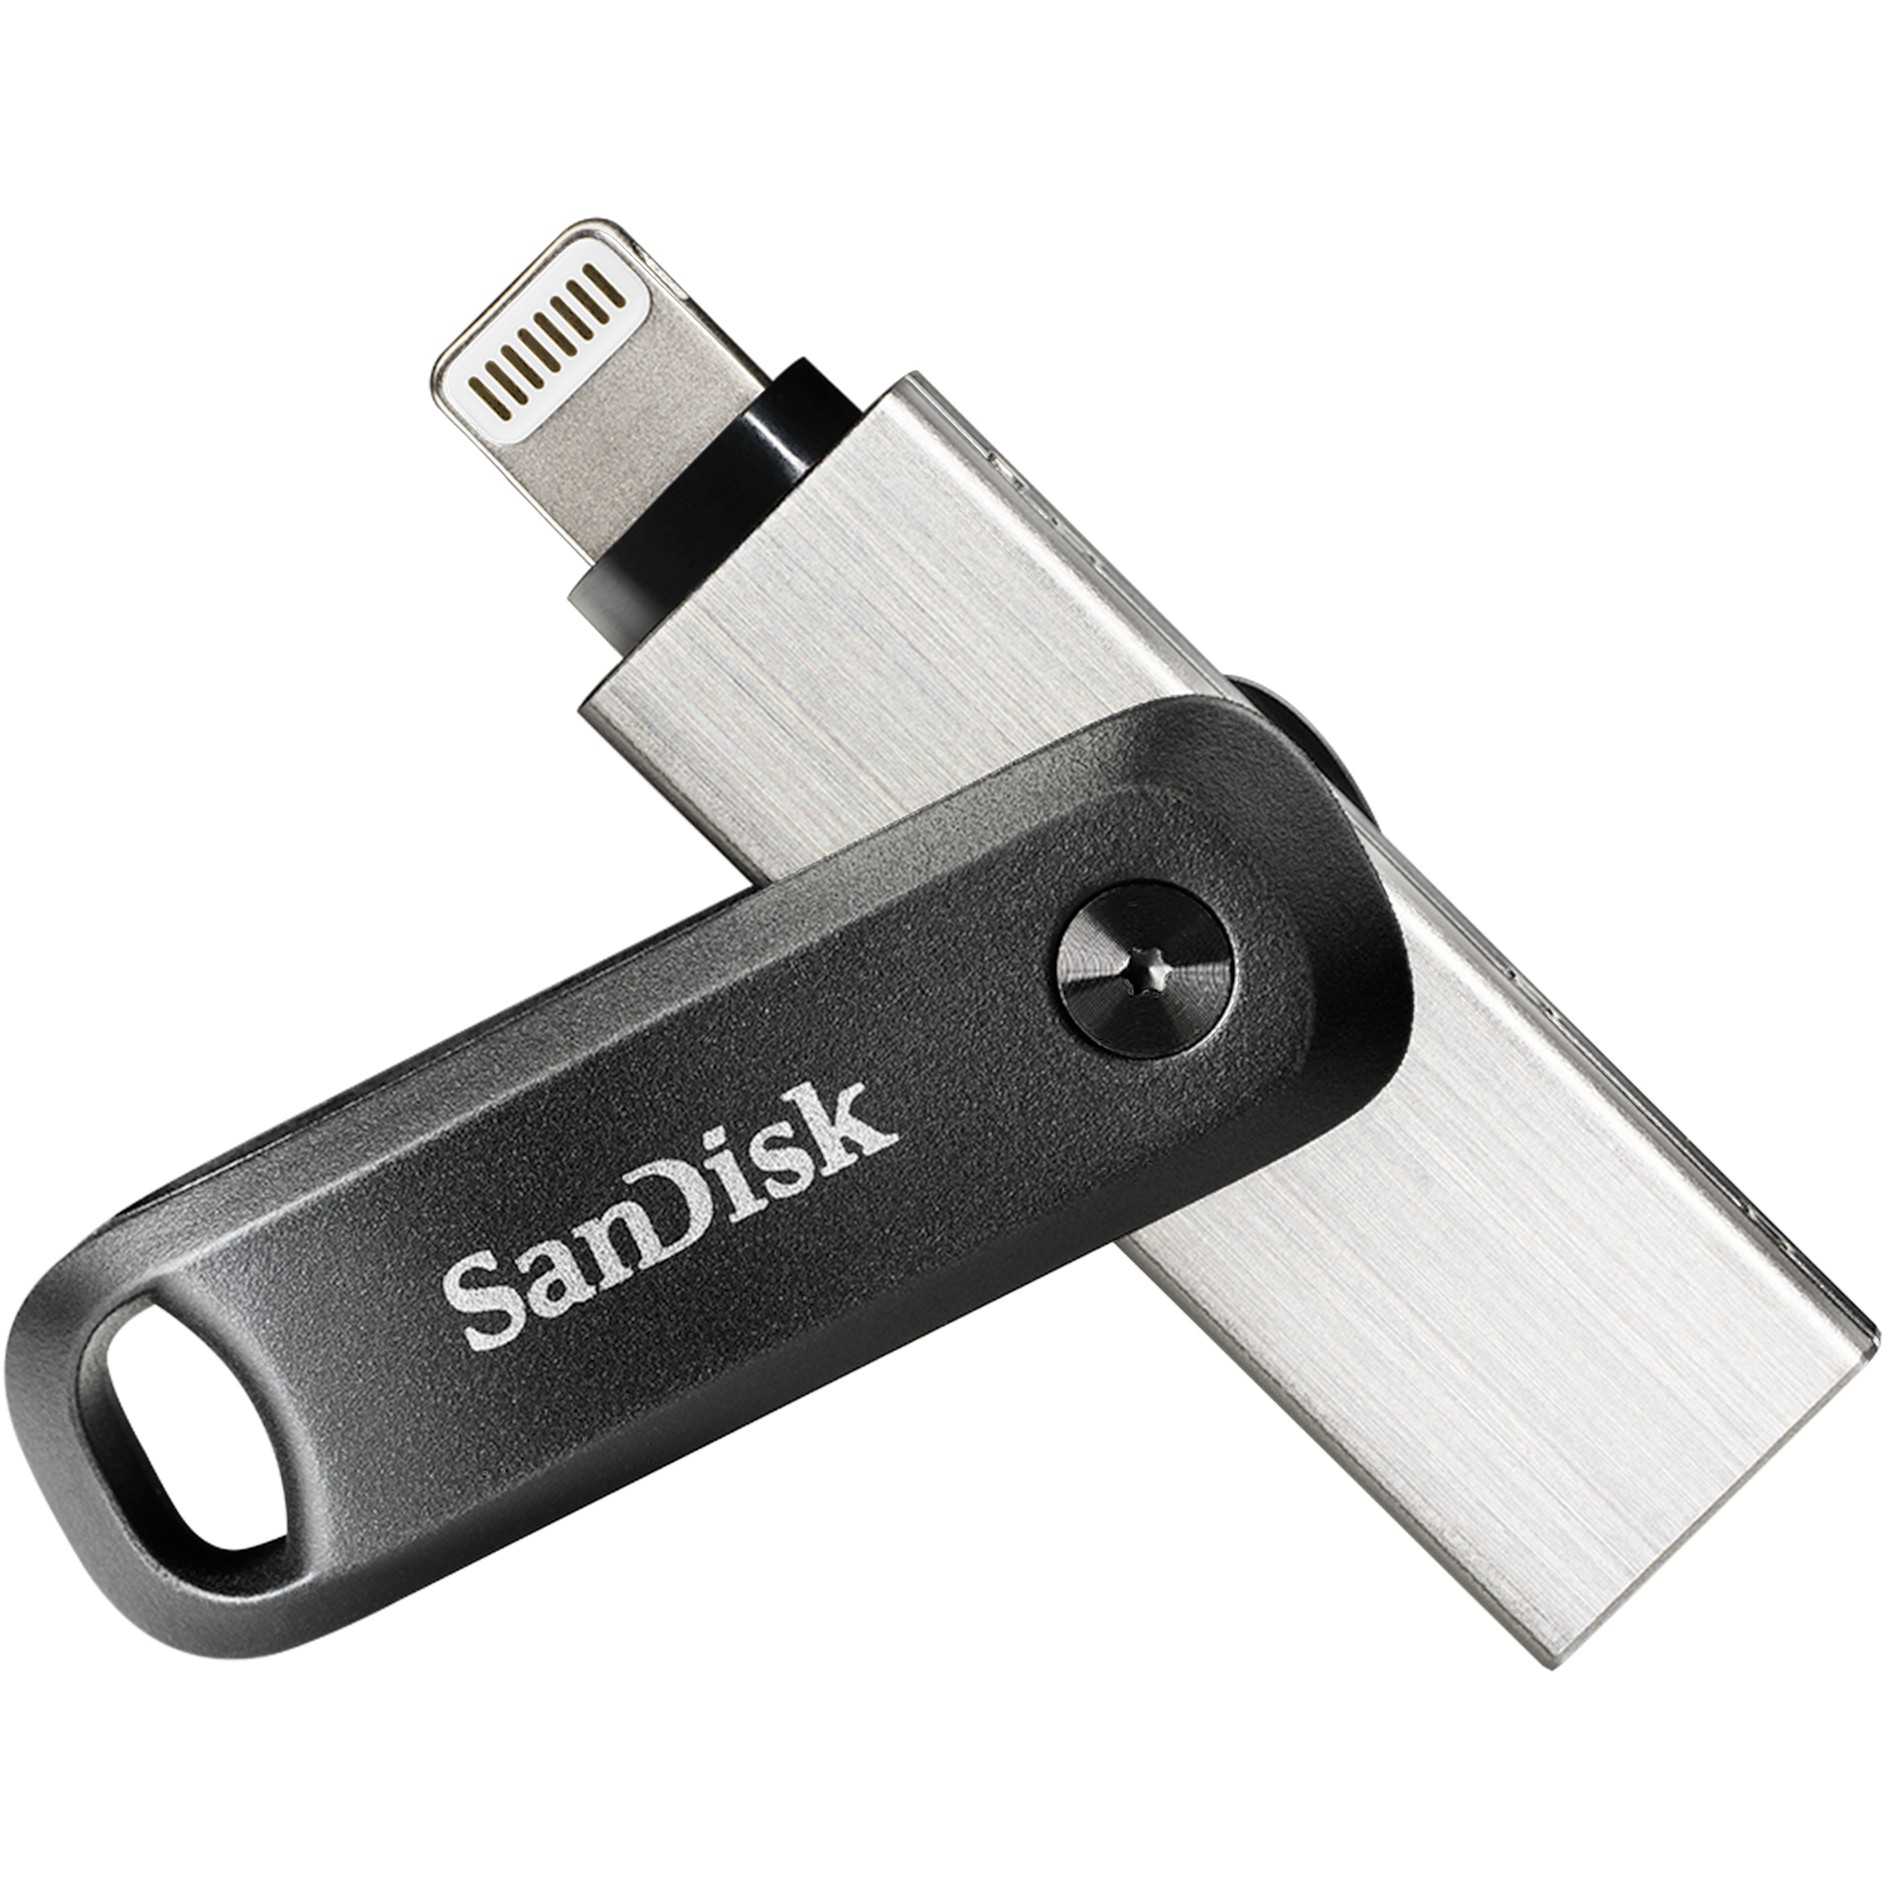 SanDisk SDIX60N-128G-GN6NE USB flash drive - SDIX60N-128G-GN6NE